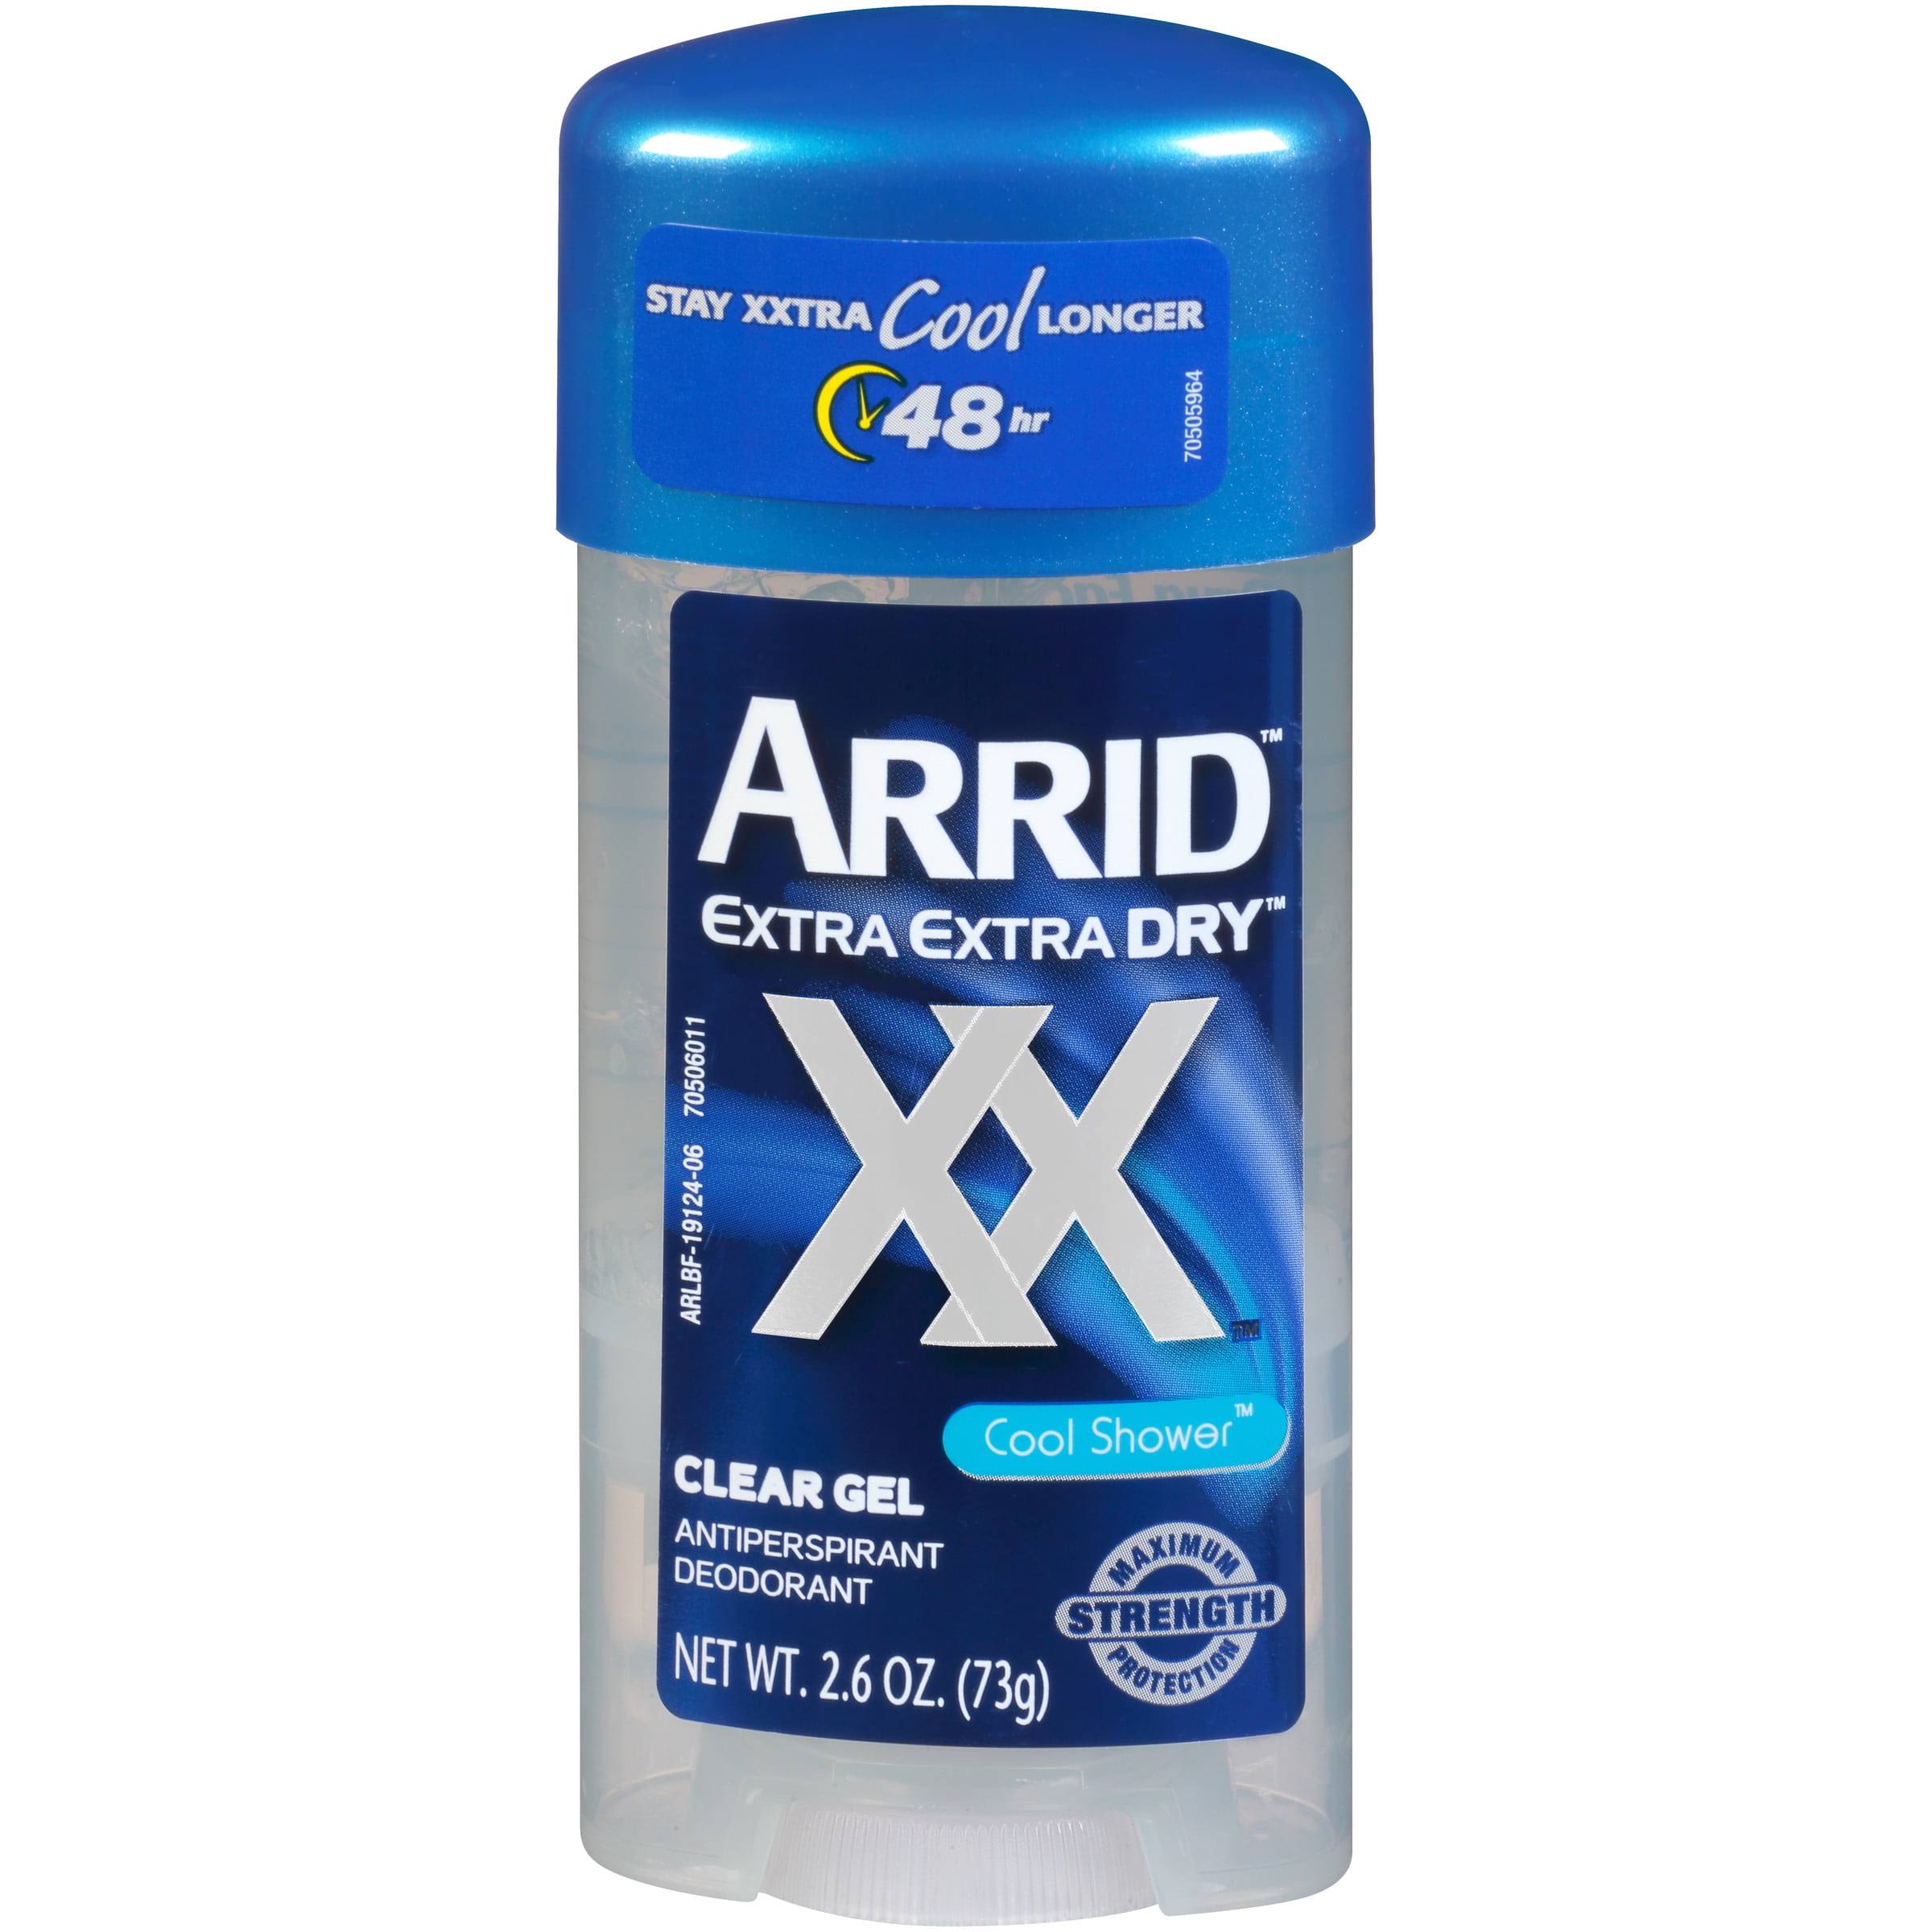 Arrid Extra Extra Dry Antiperspirant Deodorant - Clear Gel, 73g